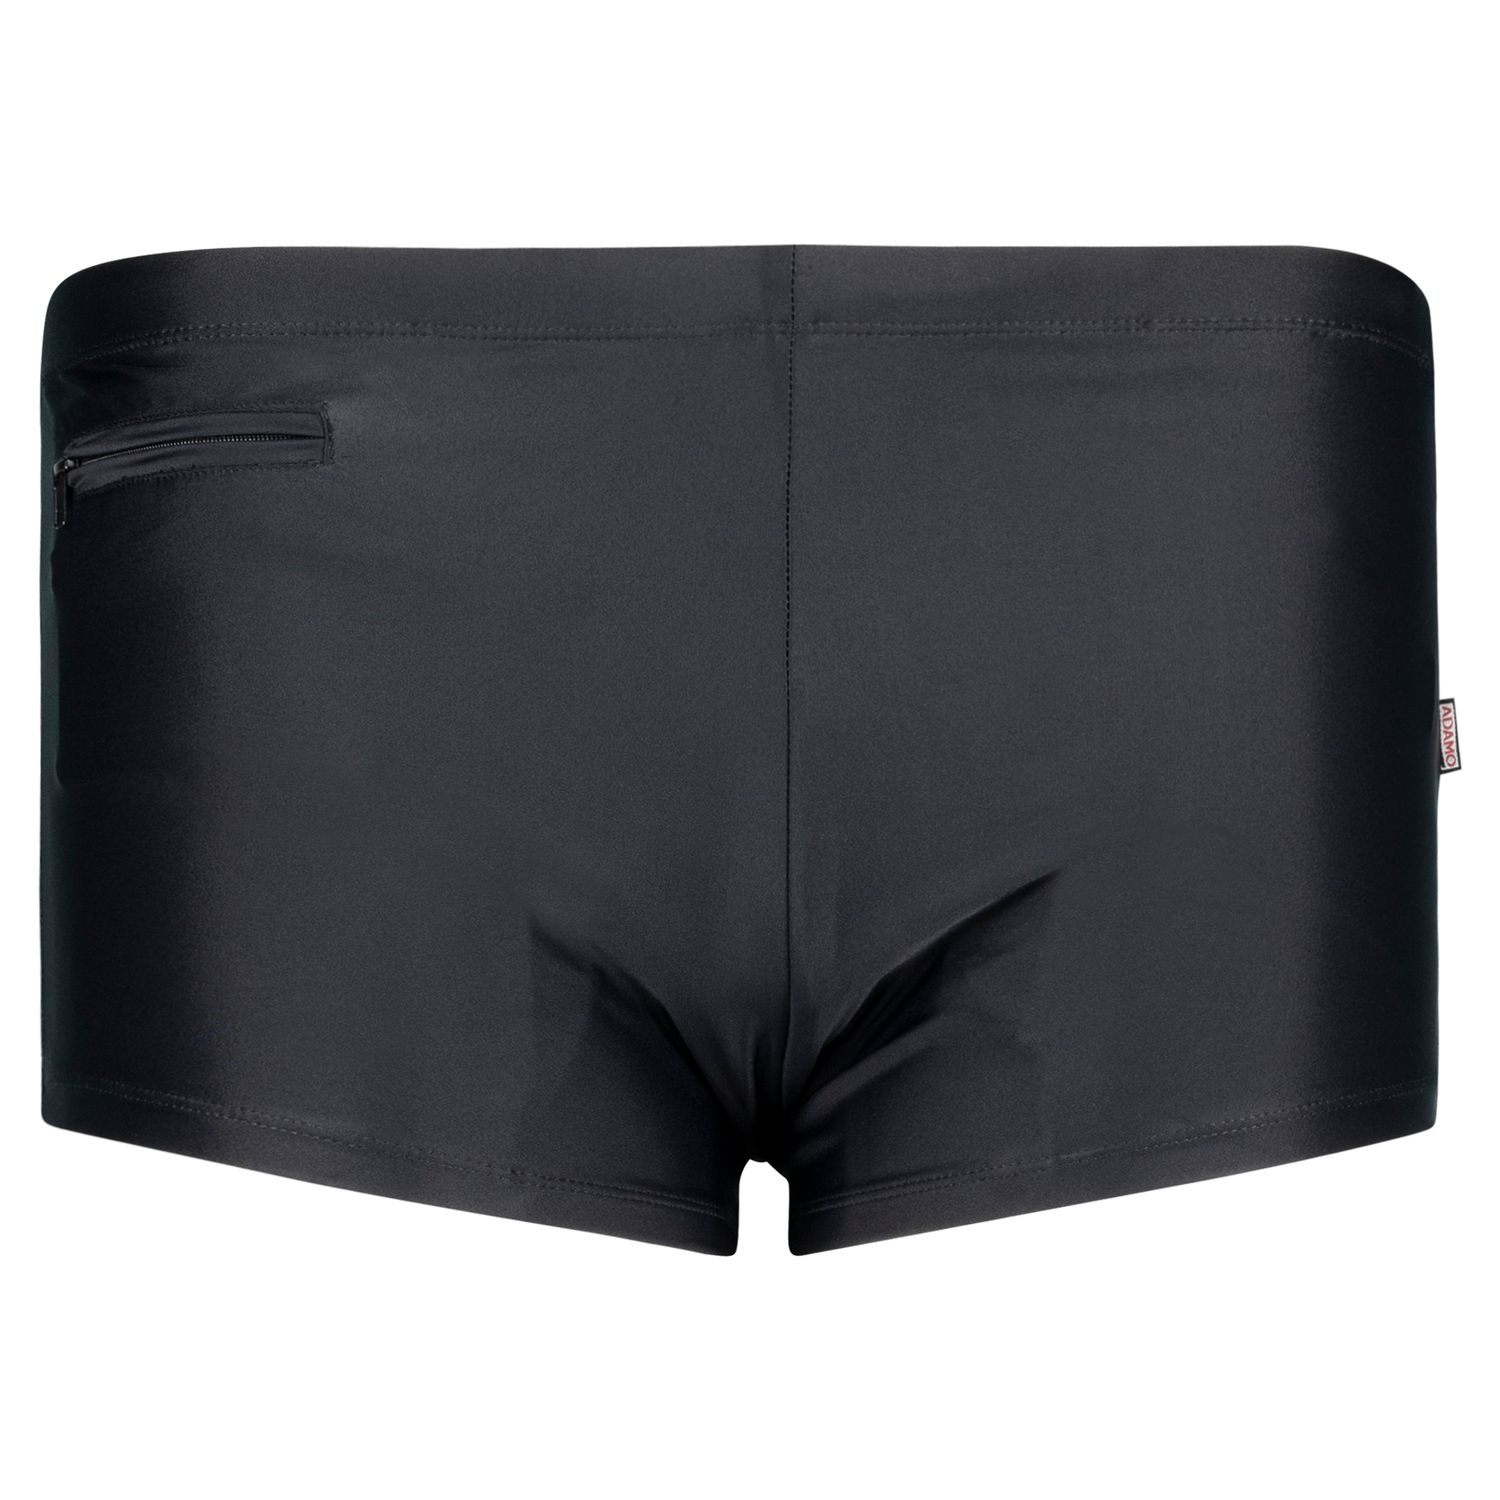 Bathing pants "Brasilia" in black for men by Adamo up to oversize 8XL